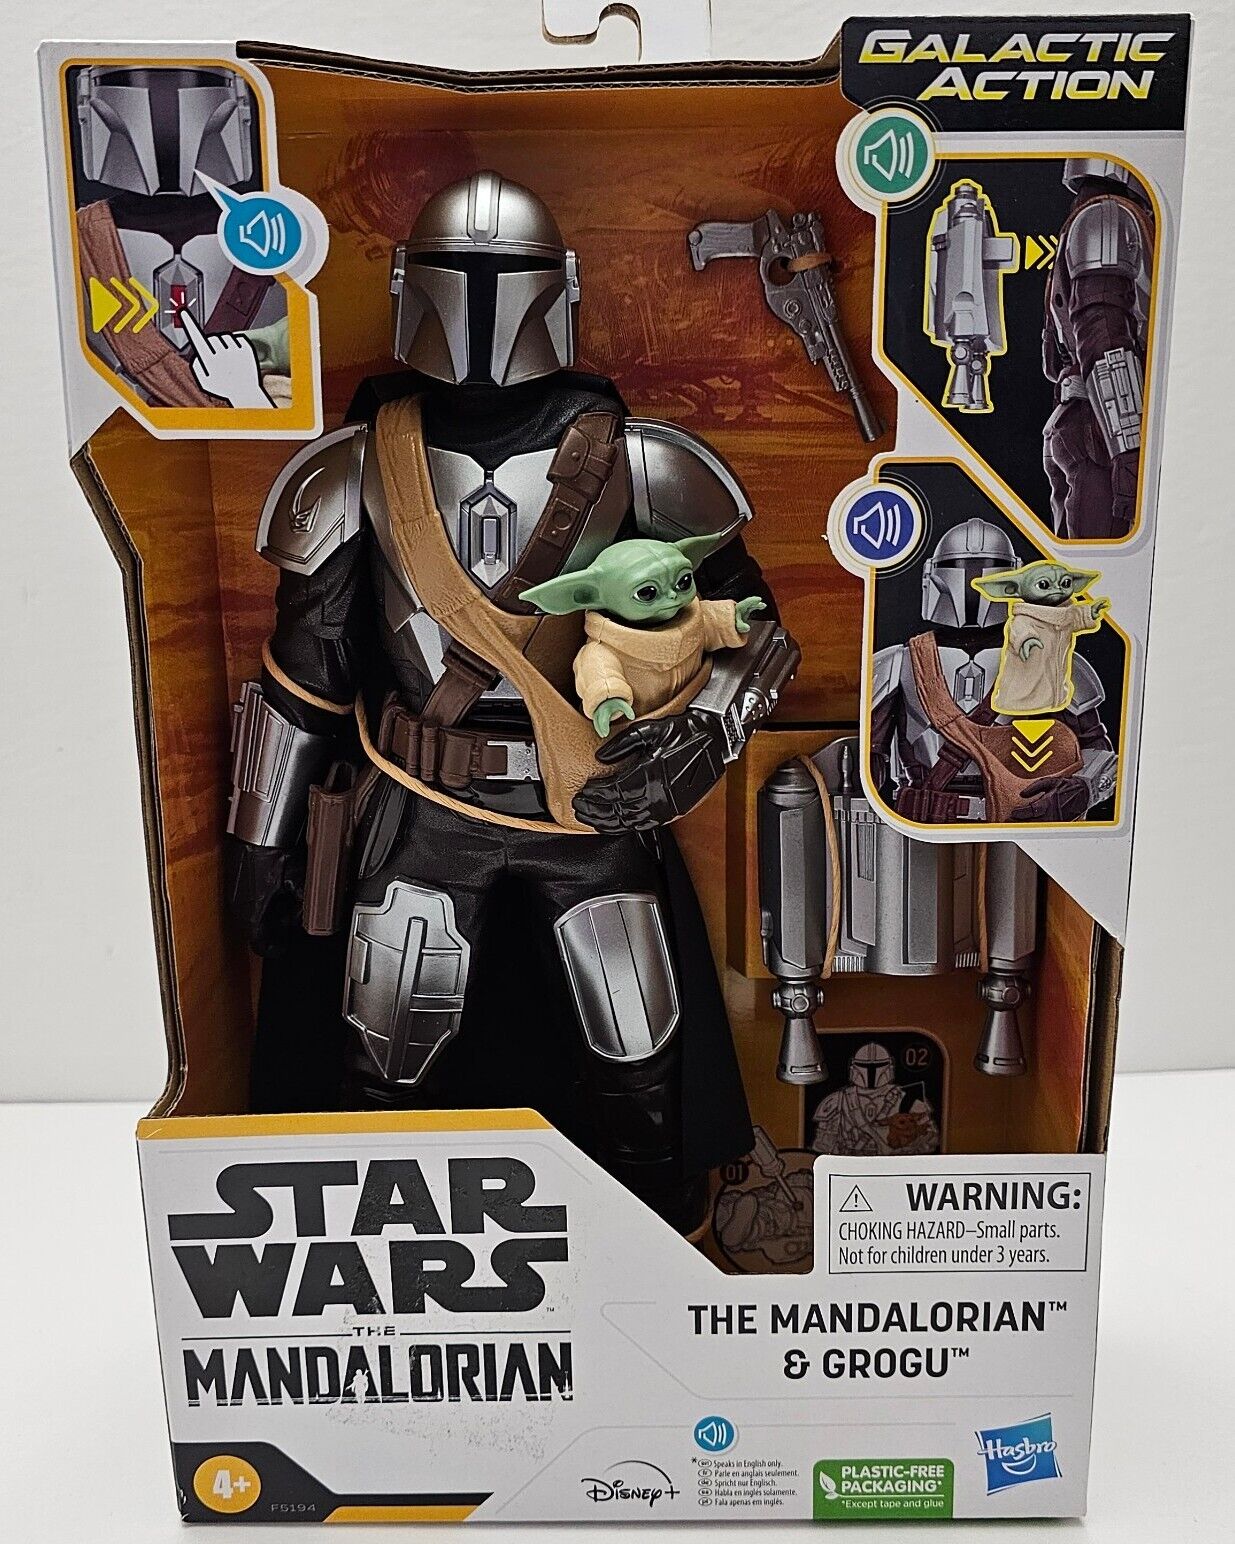 Star Wars Galactic Action The Mandalorian & Grogu Talking Electronic Toy Figure